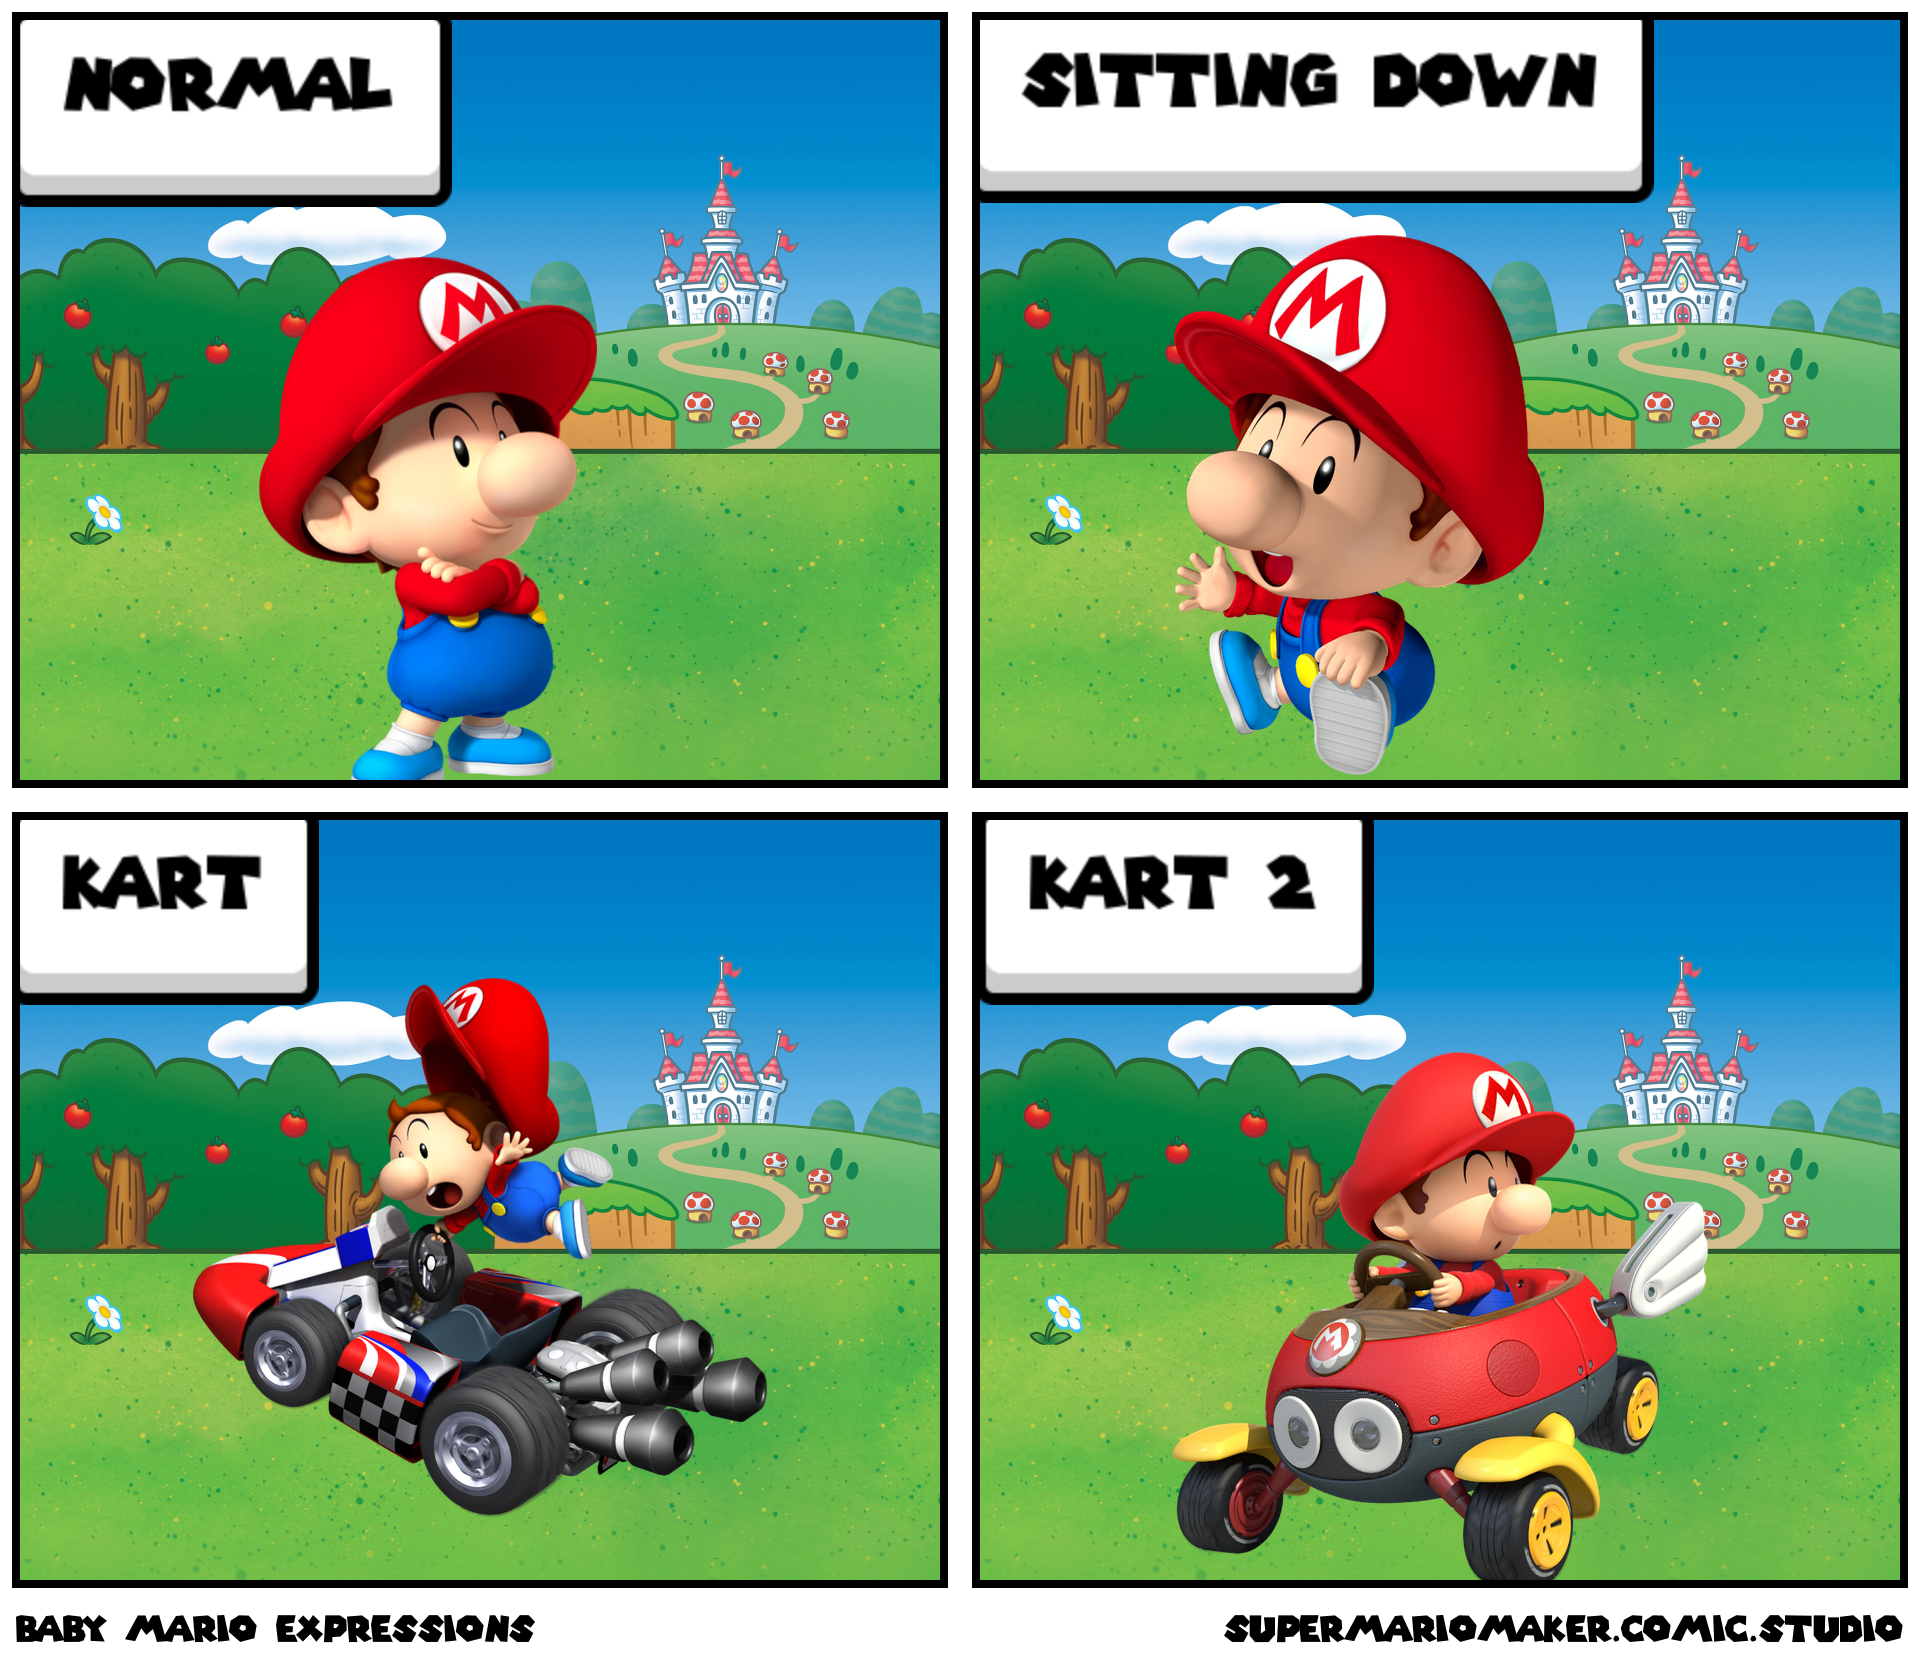 Baby Mario expressions